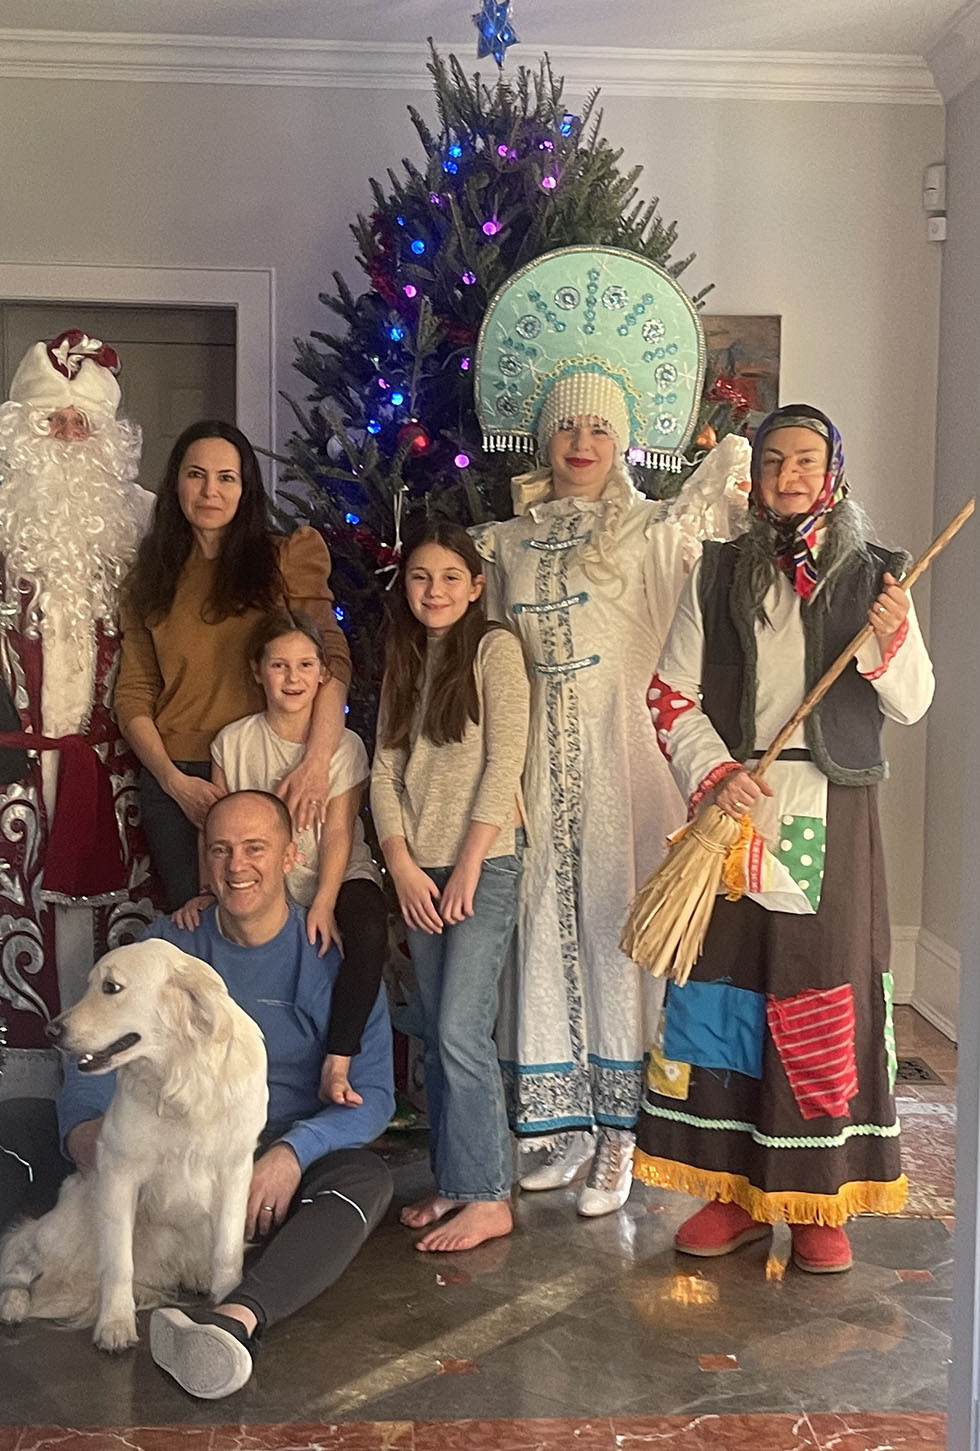     ,      ,     ,      ,  , ,  ,    , Ded Moroz Show in Connecticut, Ded Moroz, Snegurochka, Baba Yaga, Greenwich, Connecticut